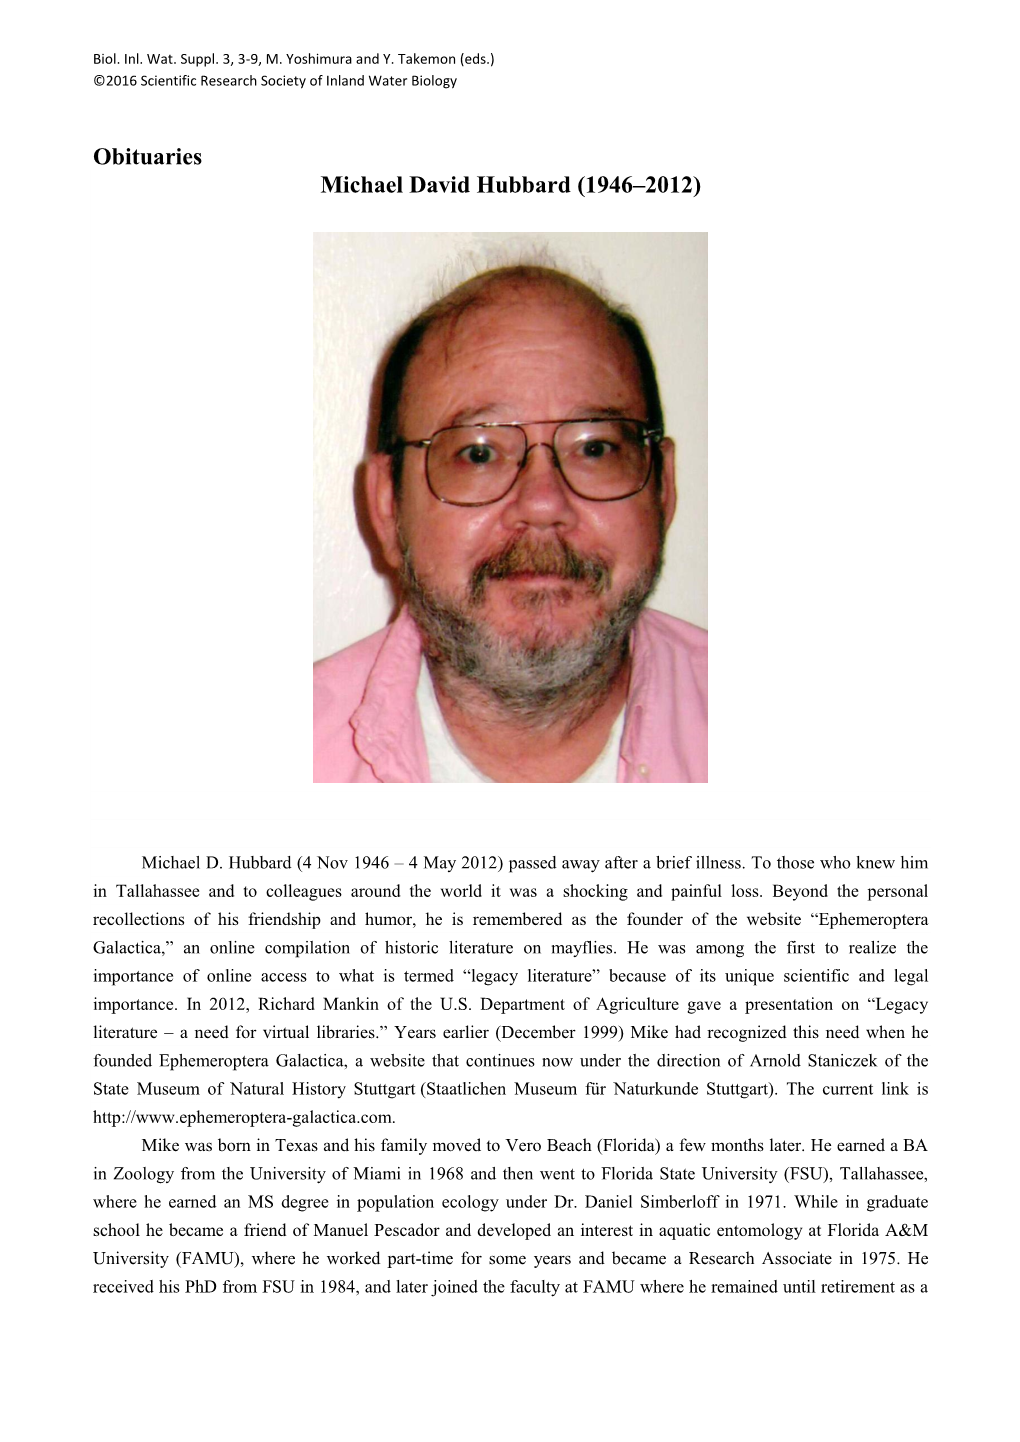 Obituaries Michael David Hubbard (1946–2012)